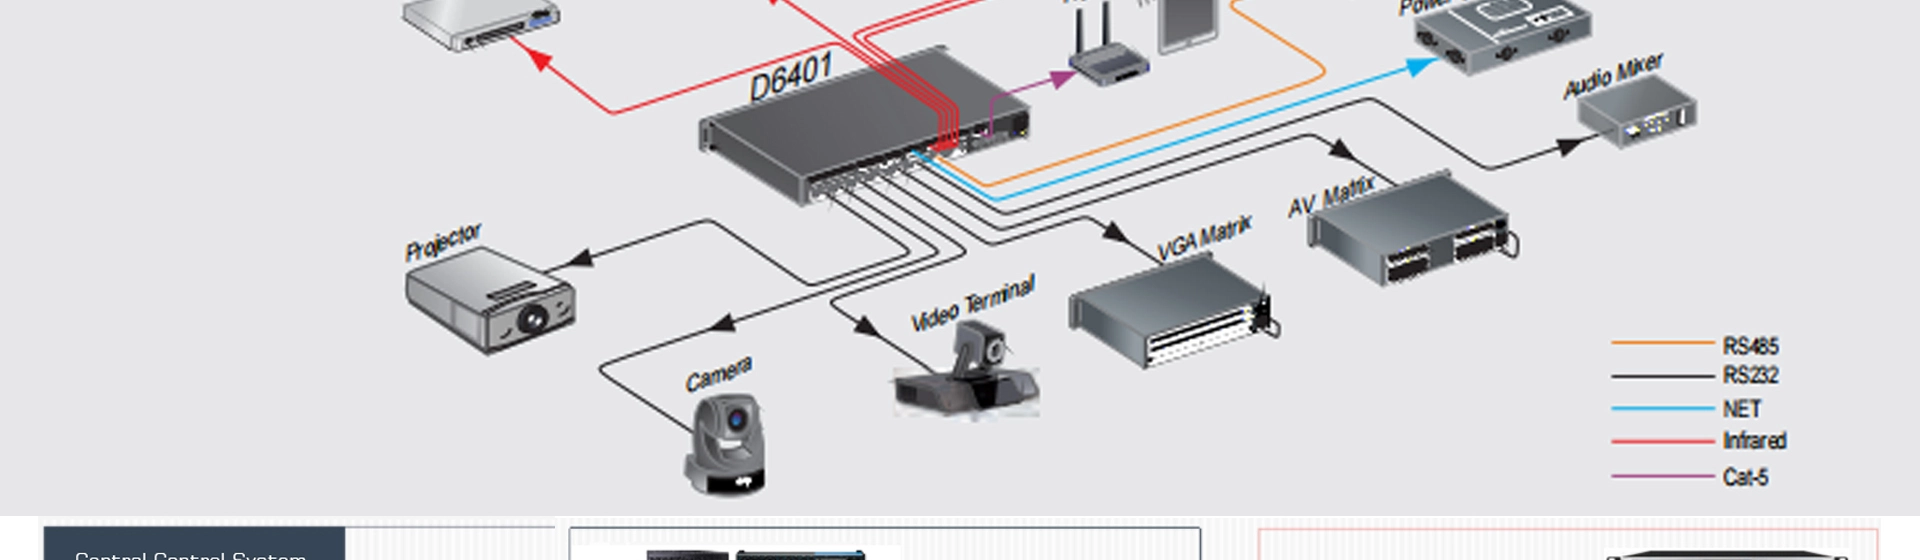 Host de control central multimedia programable